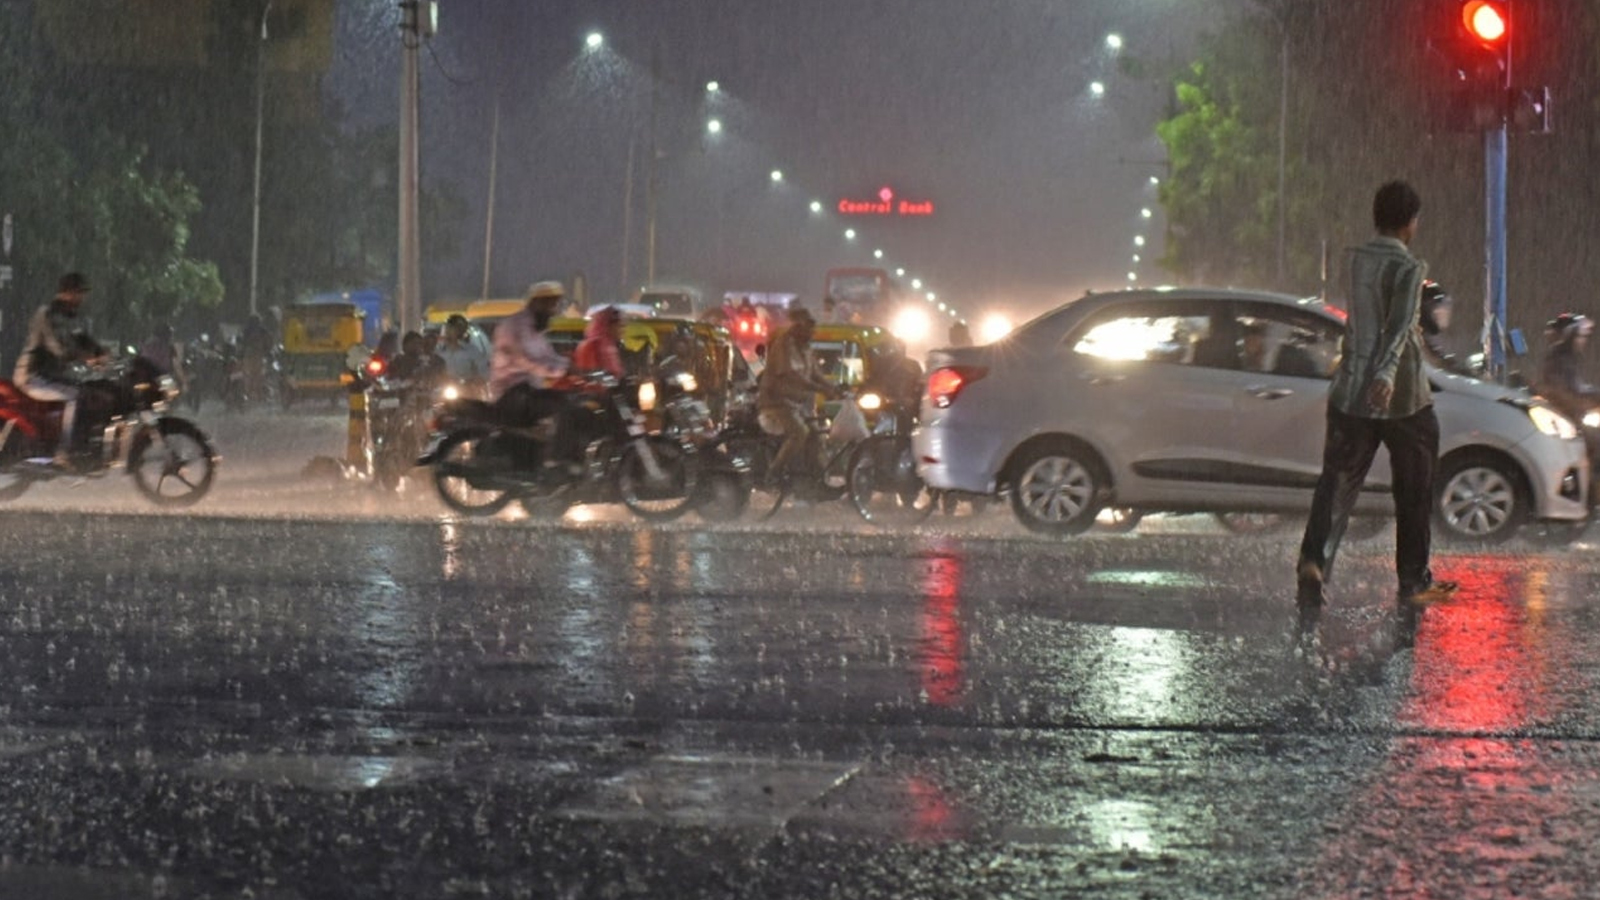 Rainfall in Ahmedabad